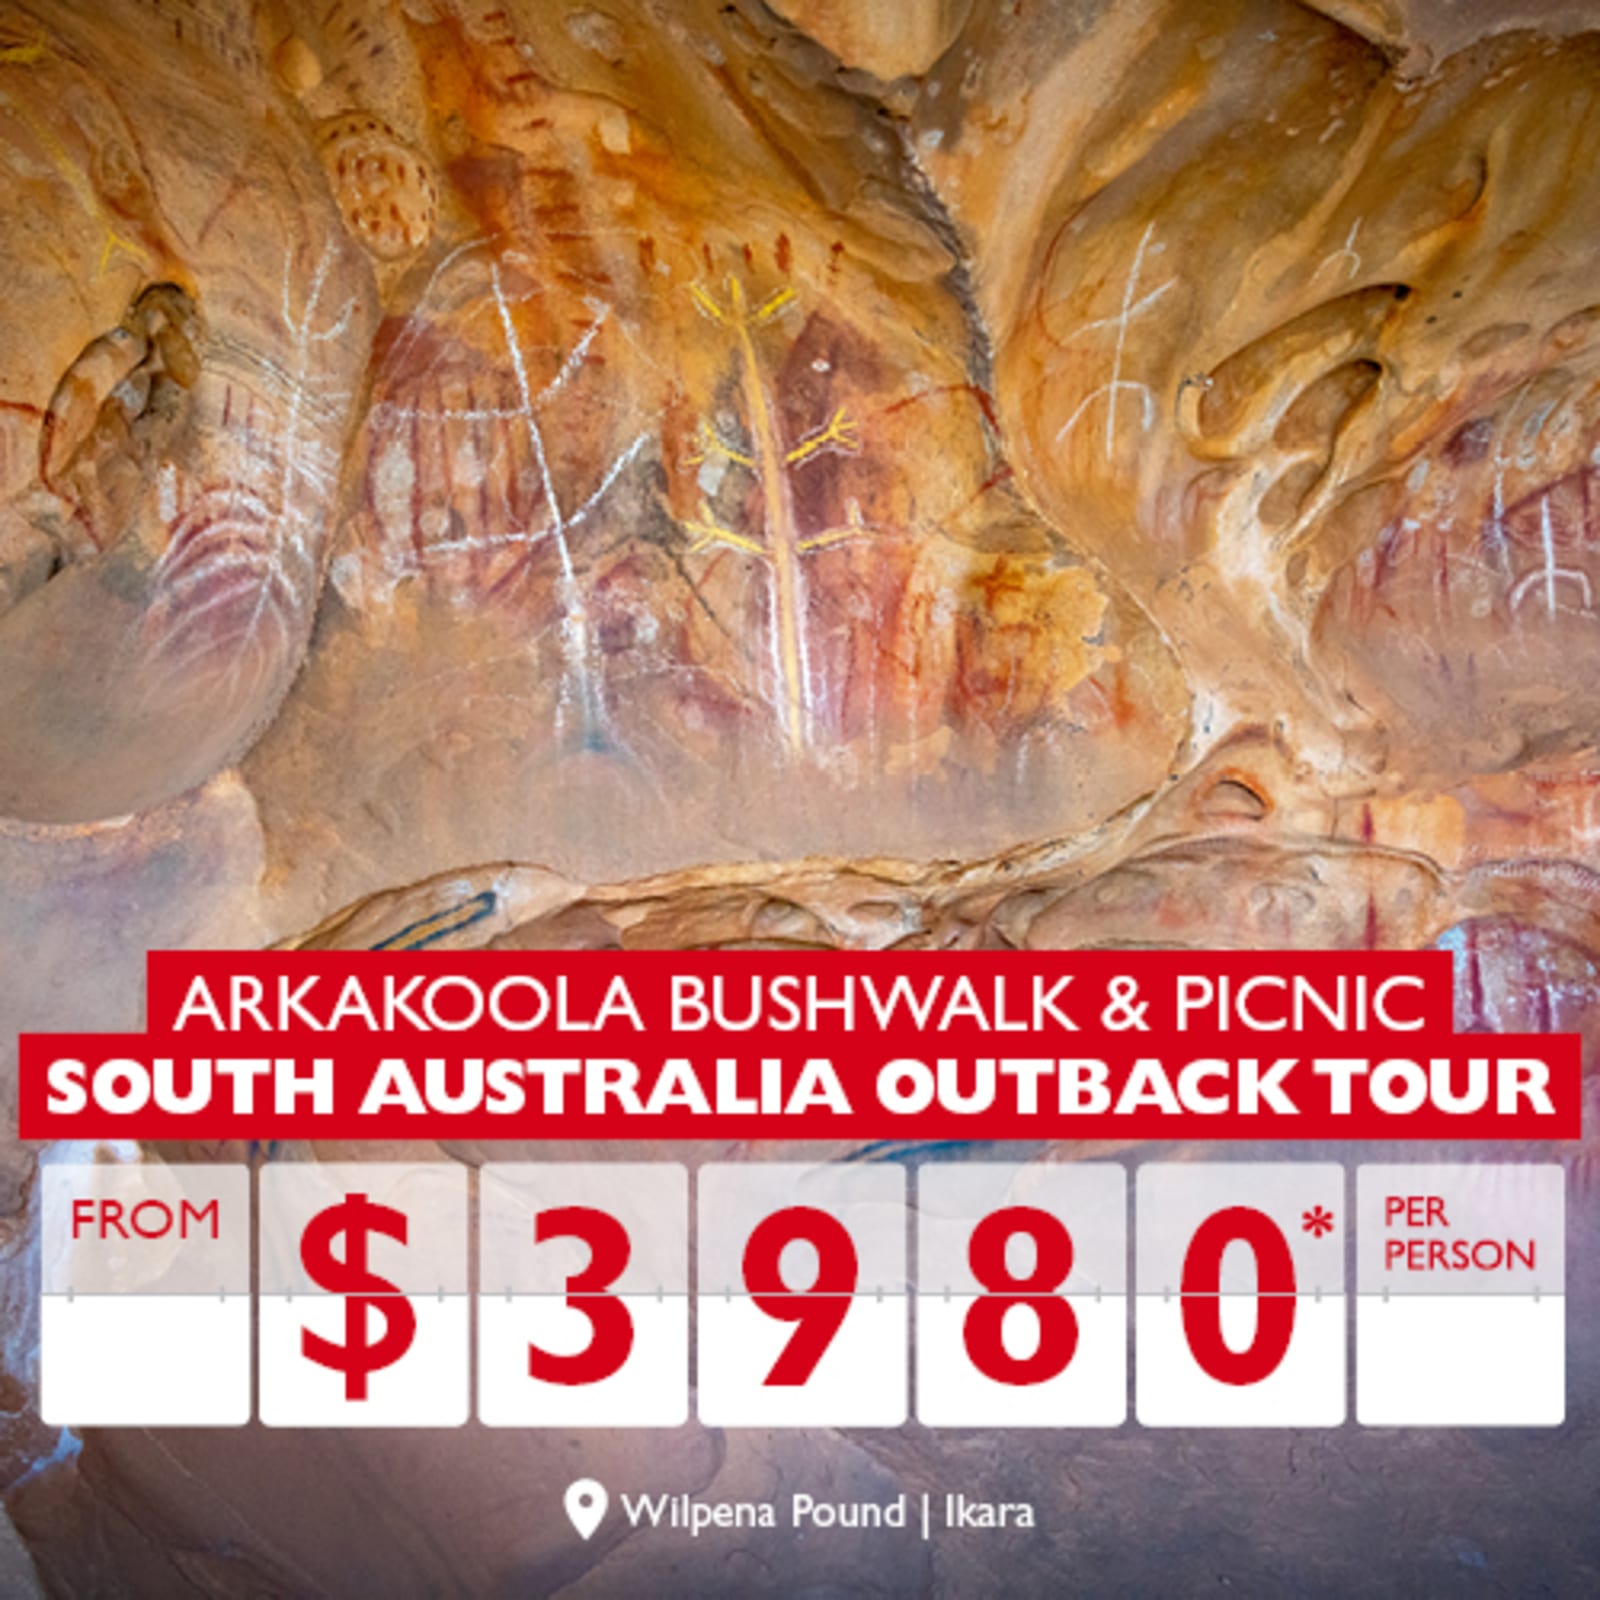 Arkakoola Bushwalk & Picnic | South Australia Outback Tour from $3980* per prson